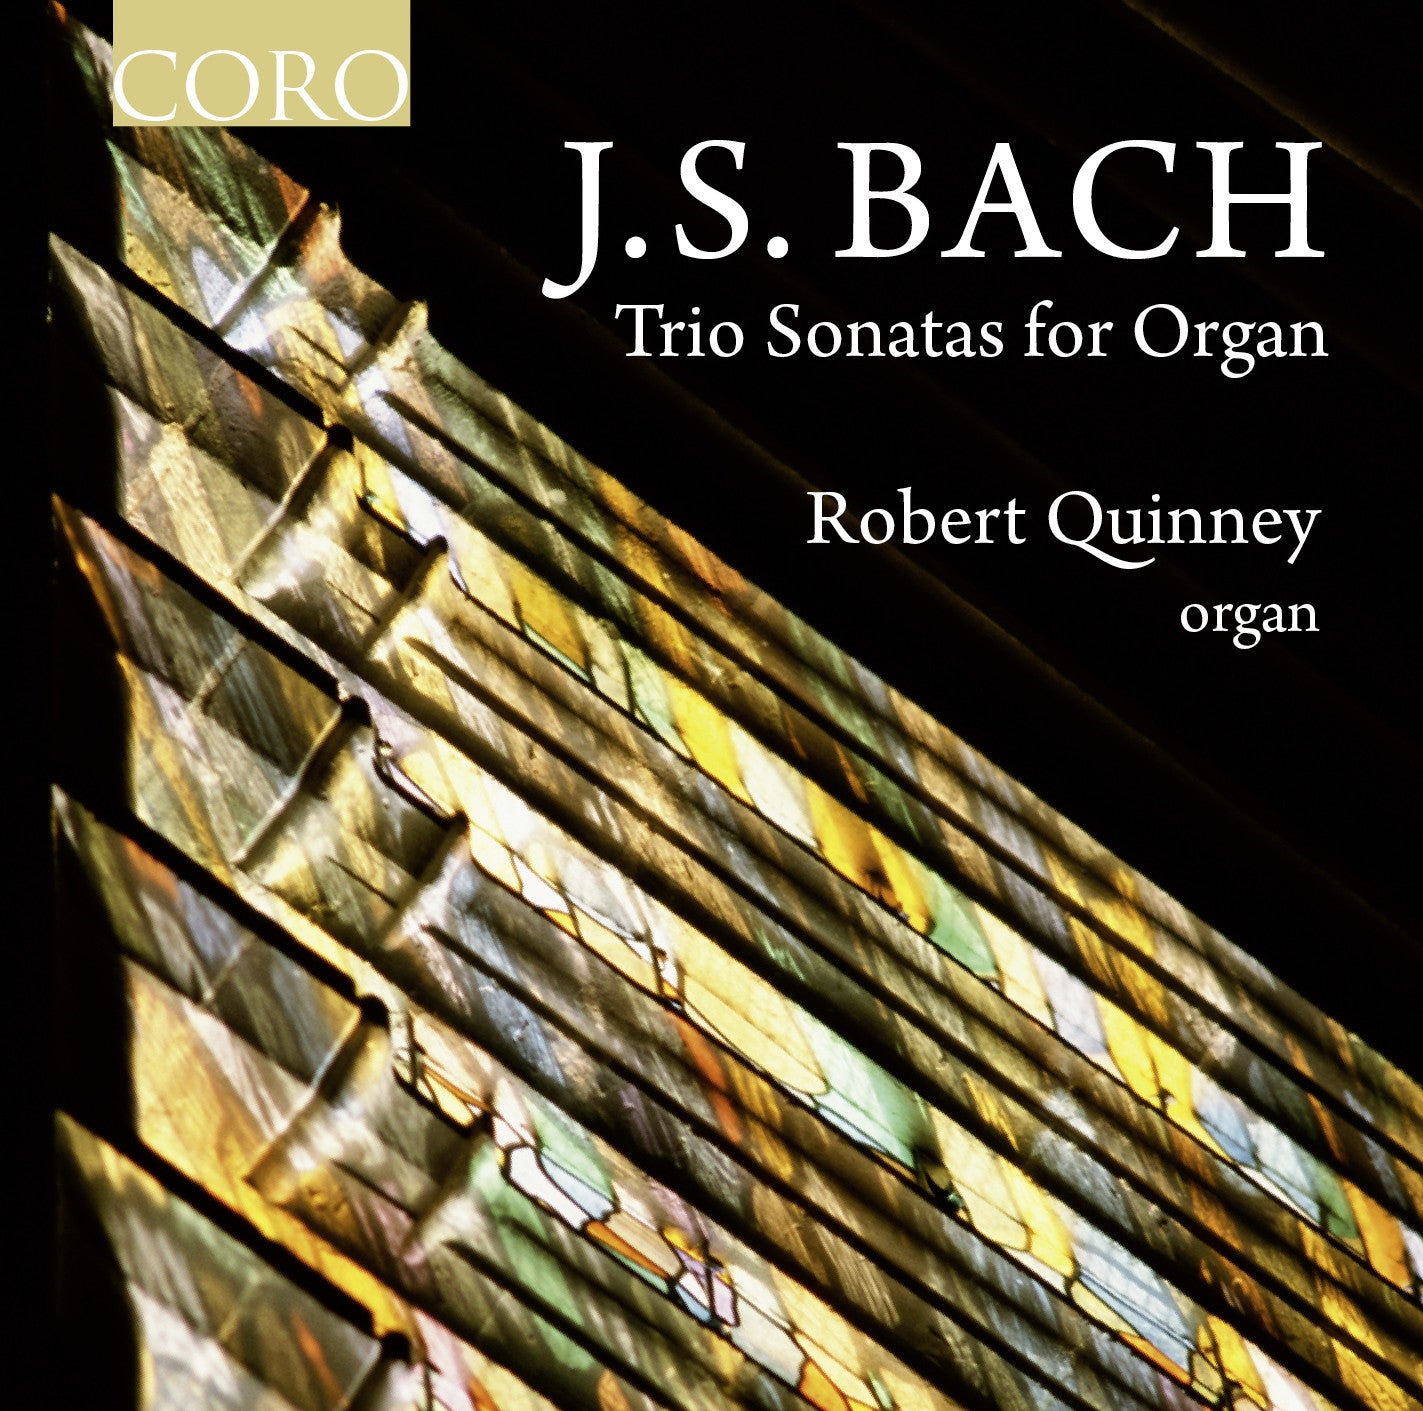 Robert Quinney. Bach j.s. – Trio Sonatas for Organ BWV 525-530, Peter Hurford. Bach Trio слушать альбом.